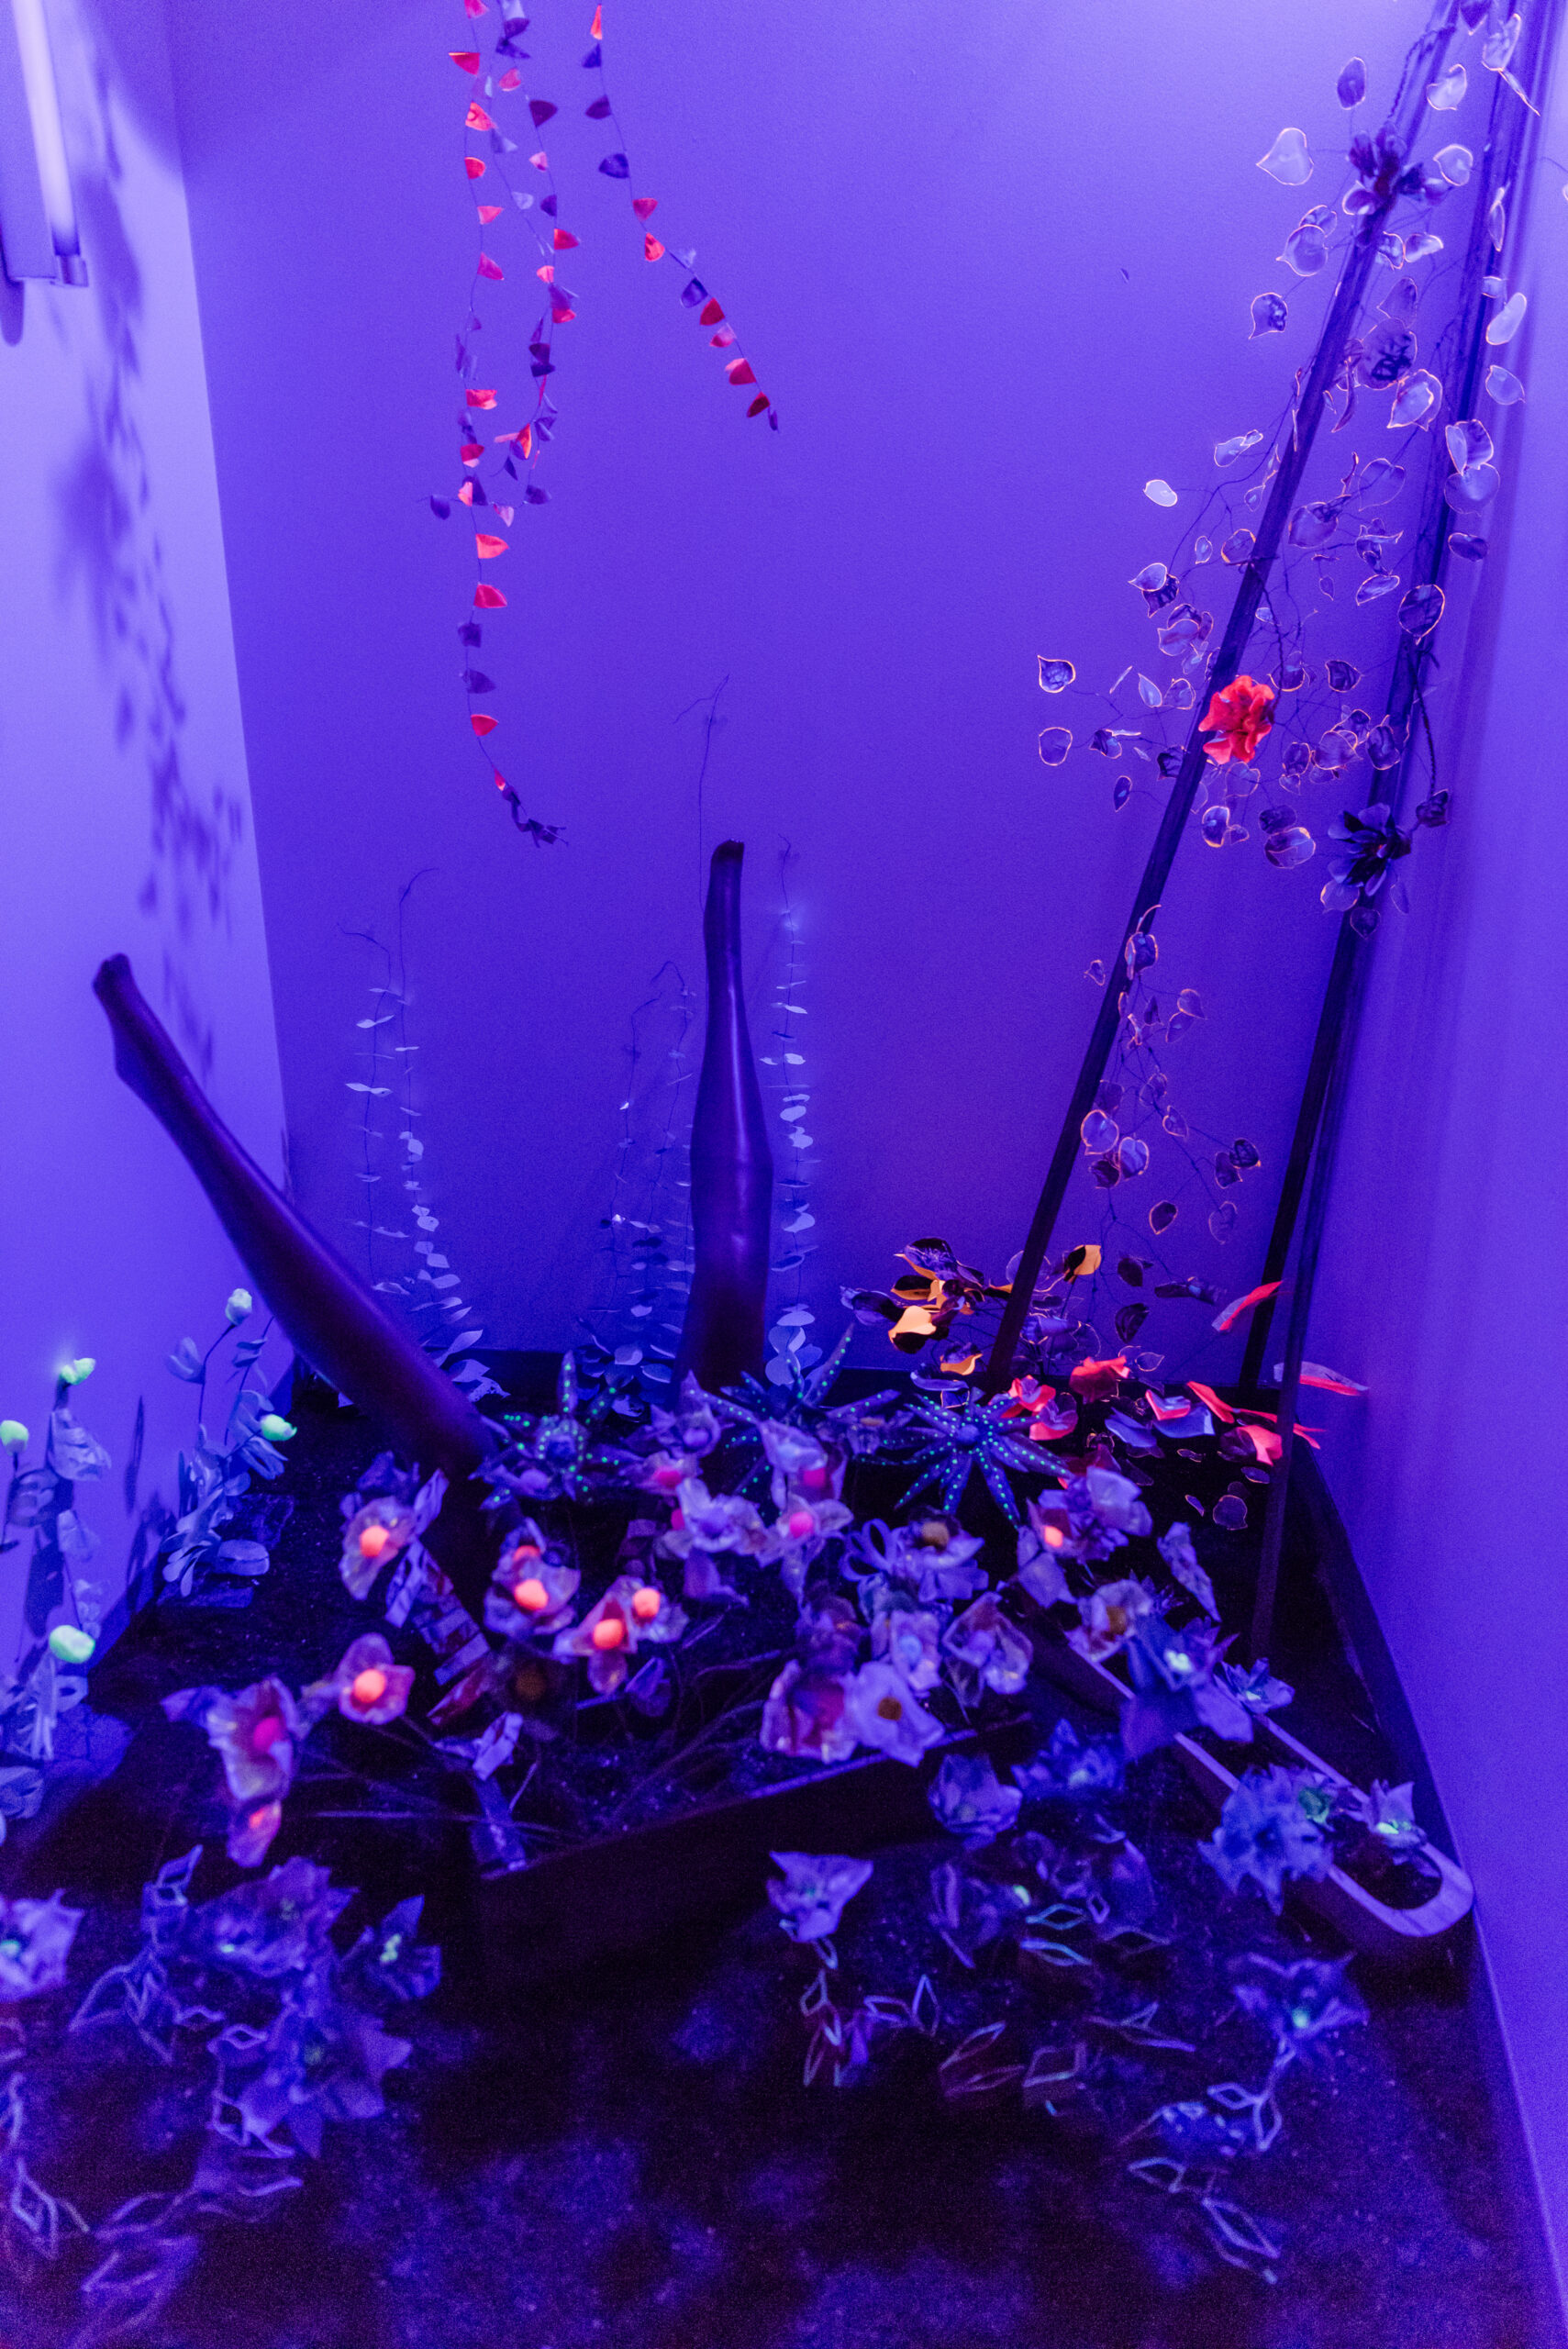 Image of a blue underwater art gallery exhibit